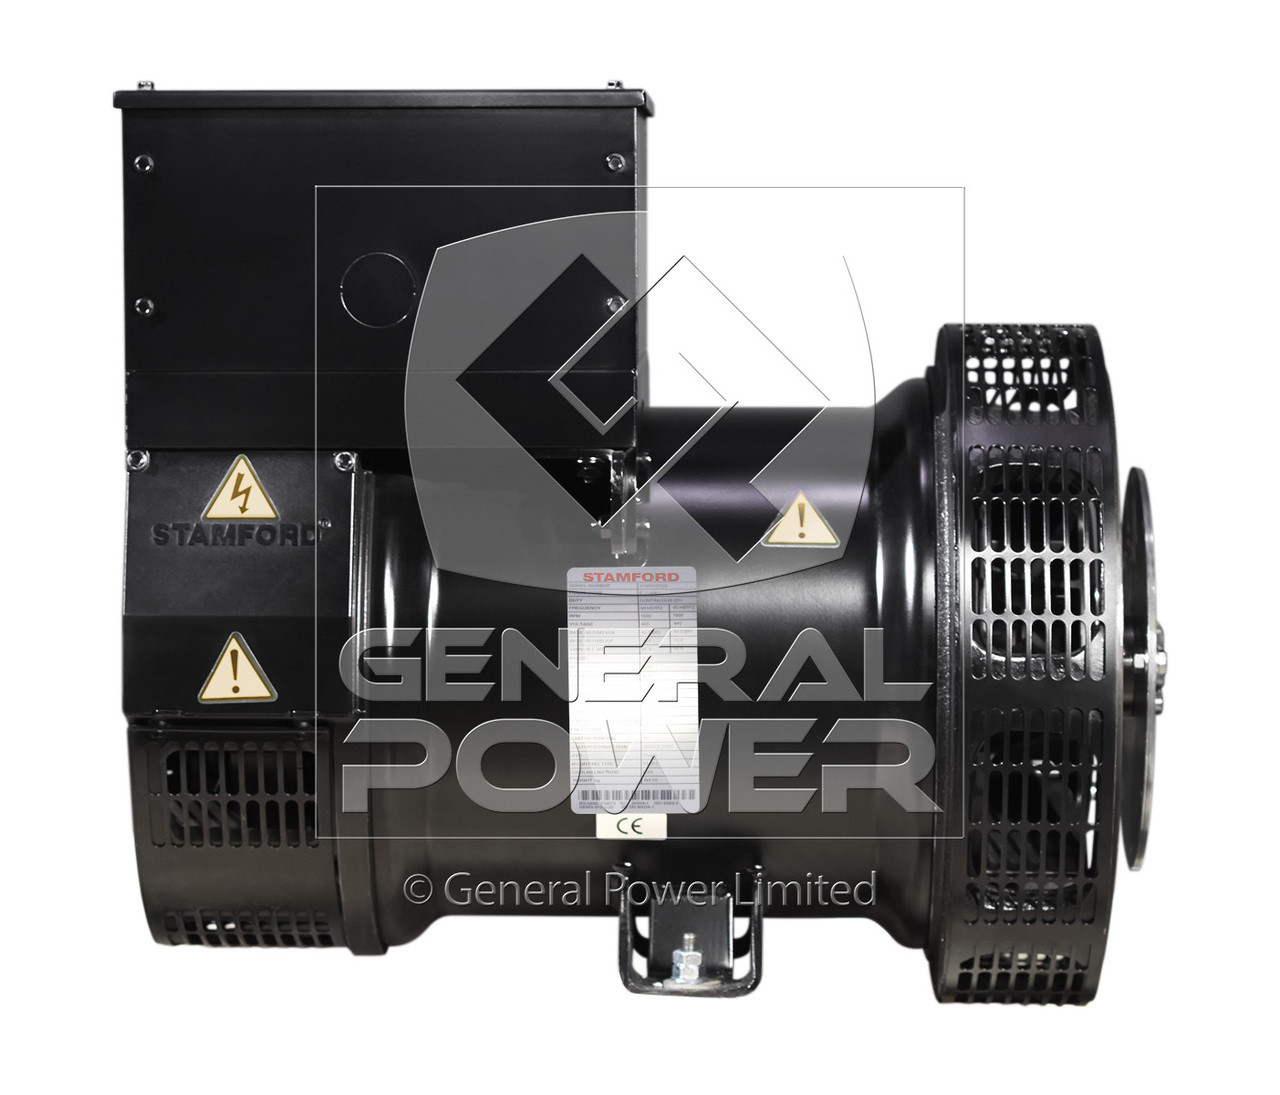 25kva 5kv Stamford Alternator 220v 50hz 20kw Dynamo Generator Supplier